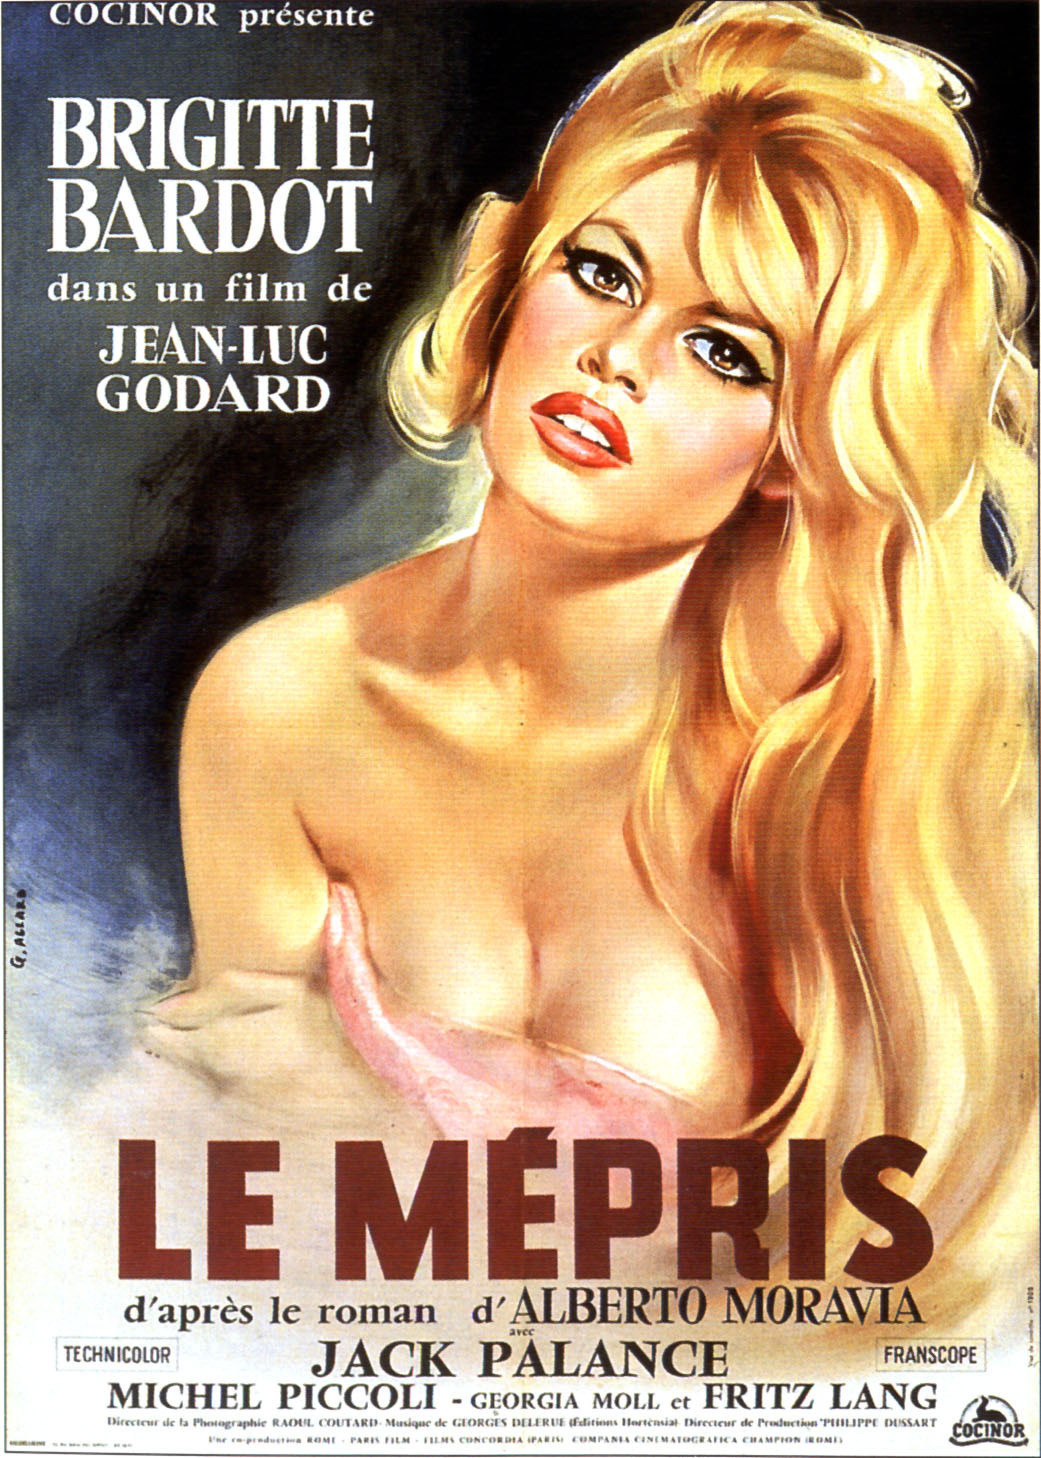 Le mepris poster, brigitte bardot jean luc godard